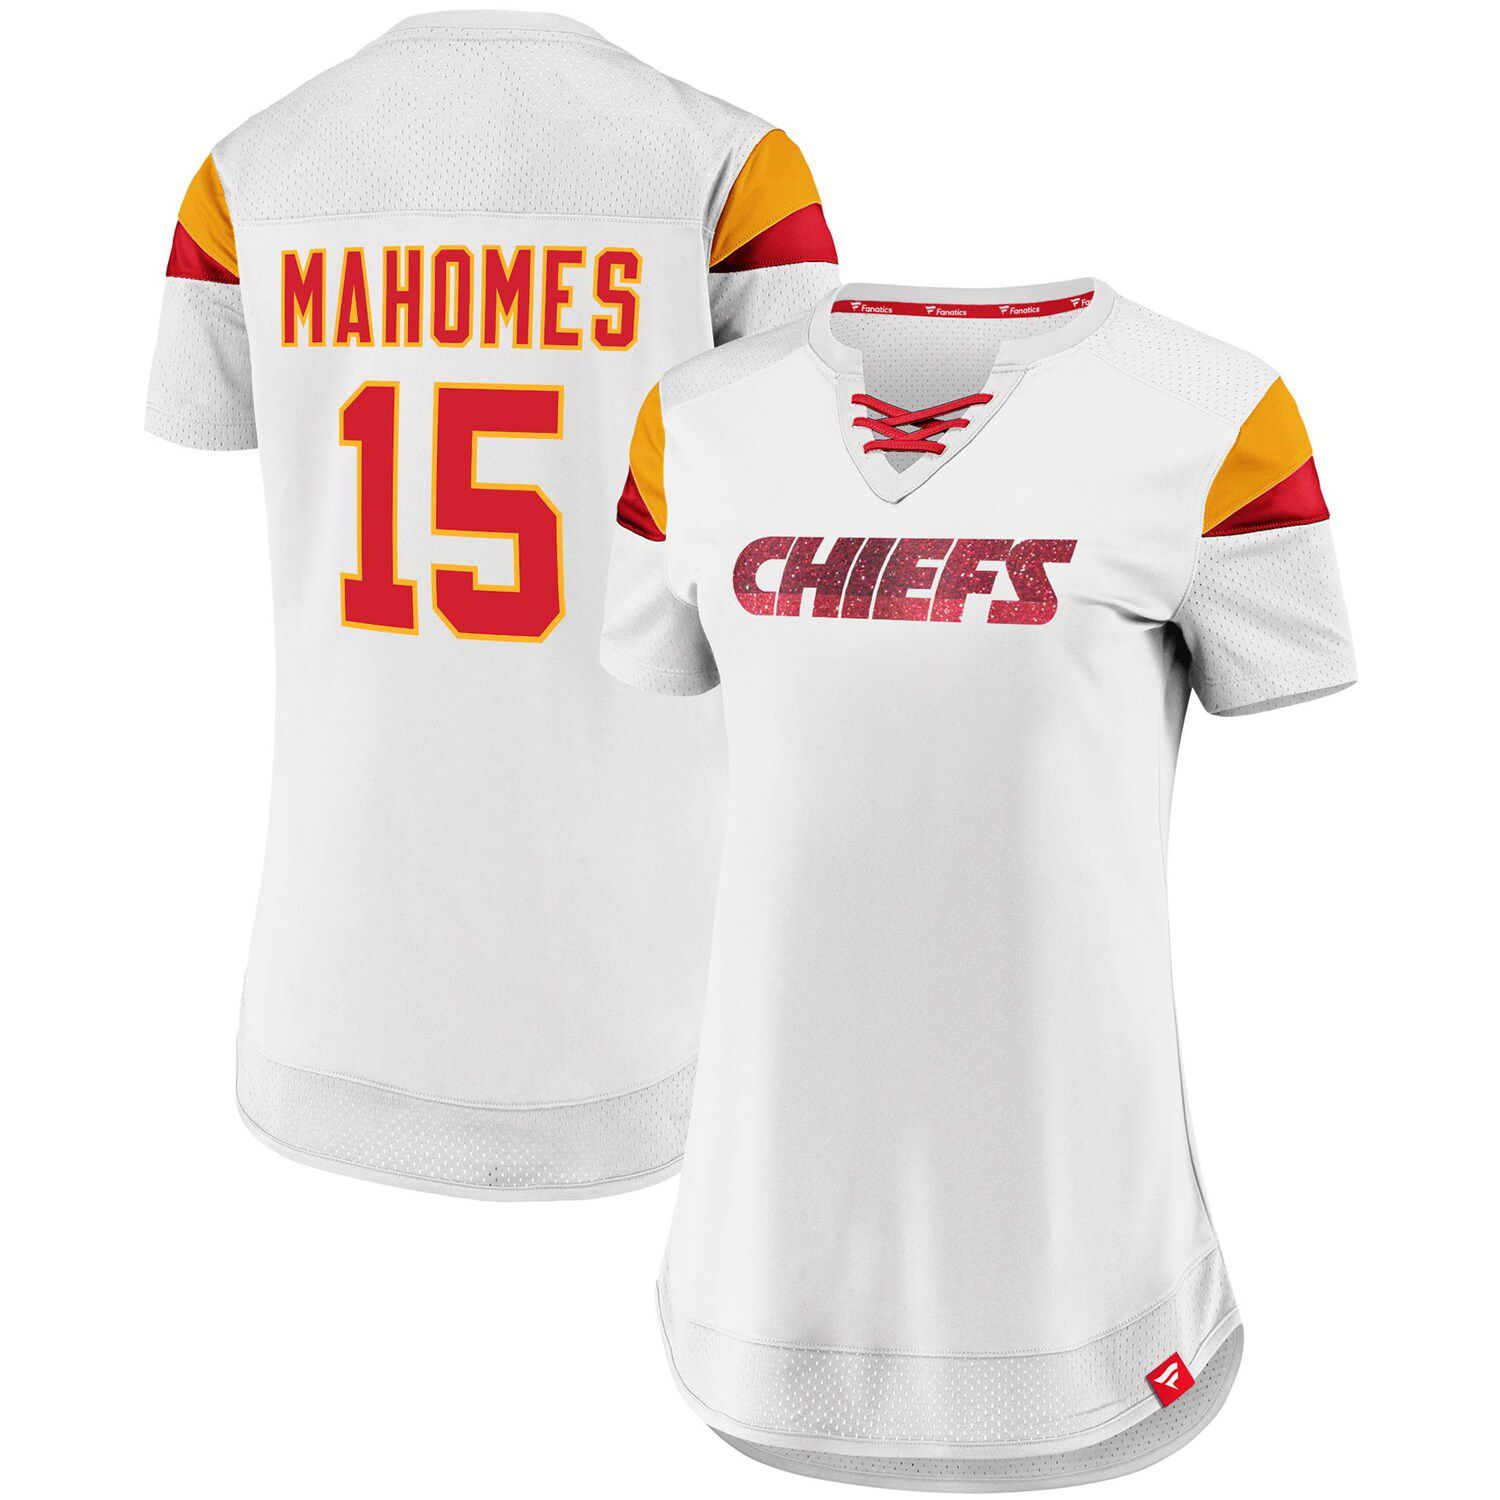 women's mahomes chiefs jersey